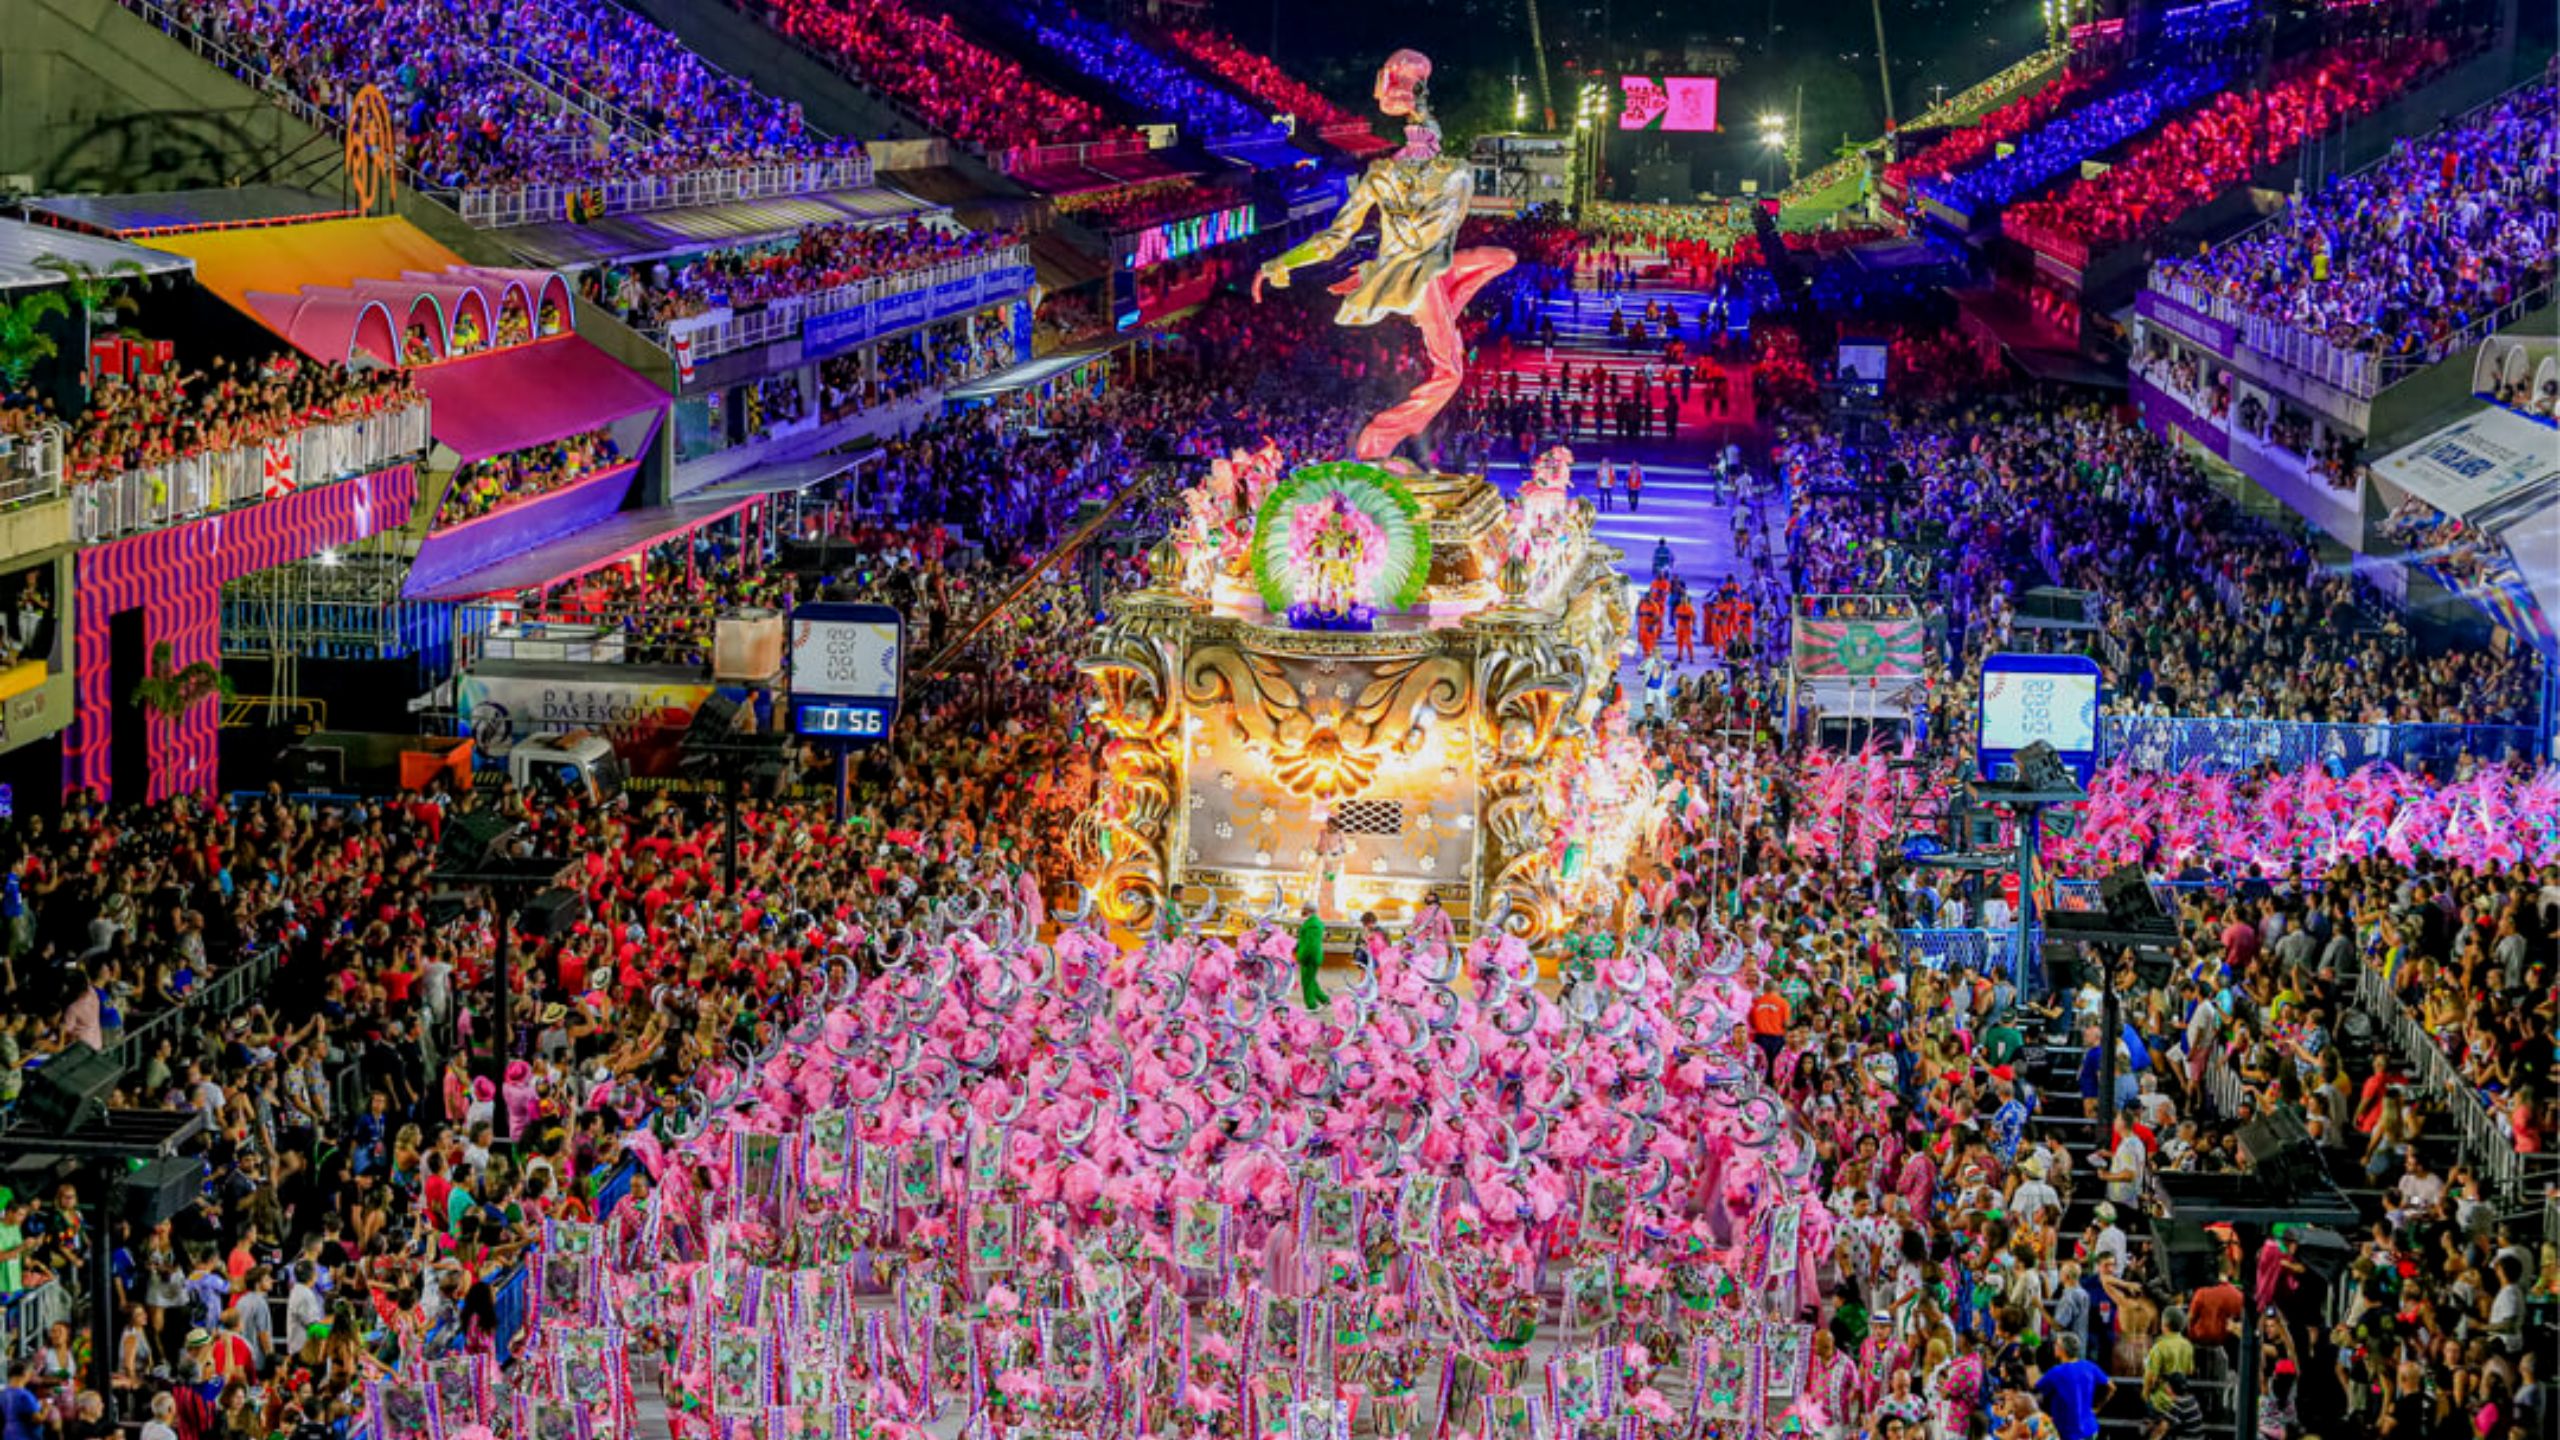 Brazil Carnival: બ્રાઝિલમાં રાજધાની રિયો ડી જાનેરો સહિત સમગ્ર દેશના કાર્નિવલ શરૂ, થશે દમાકેદાર પર્ફોર્મન્સ